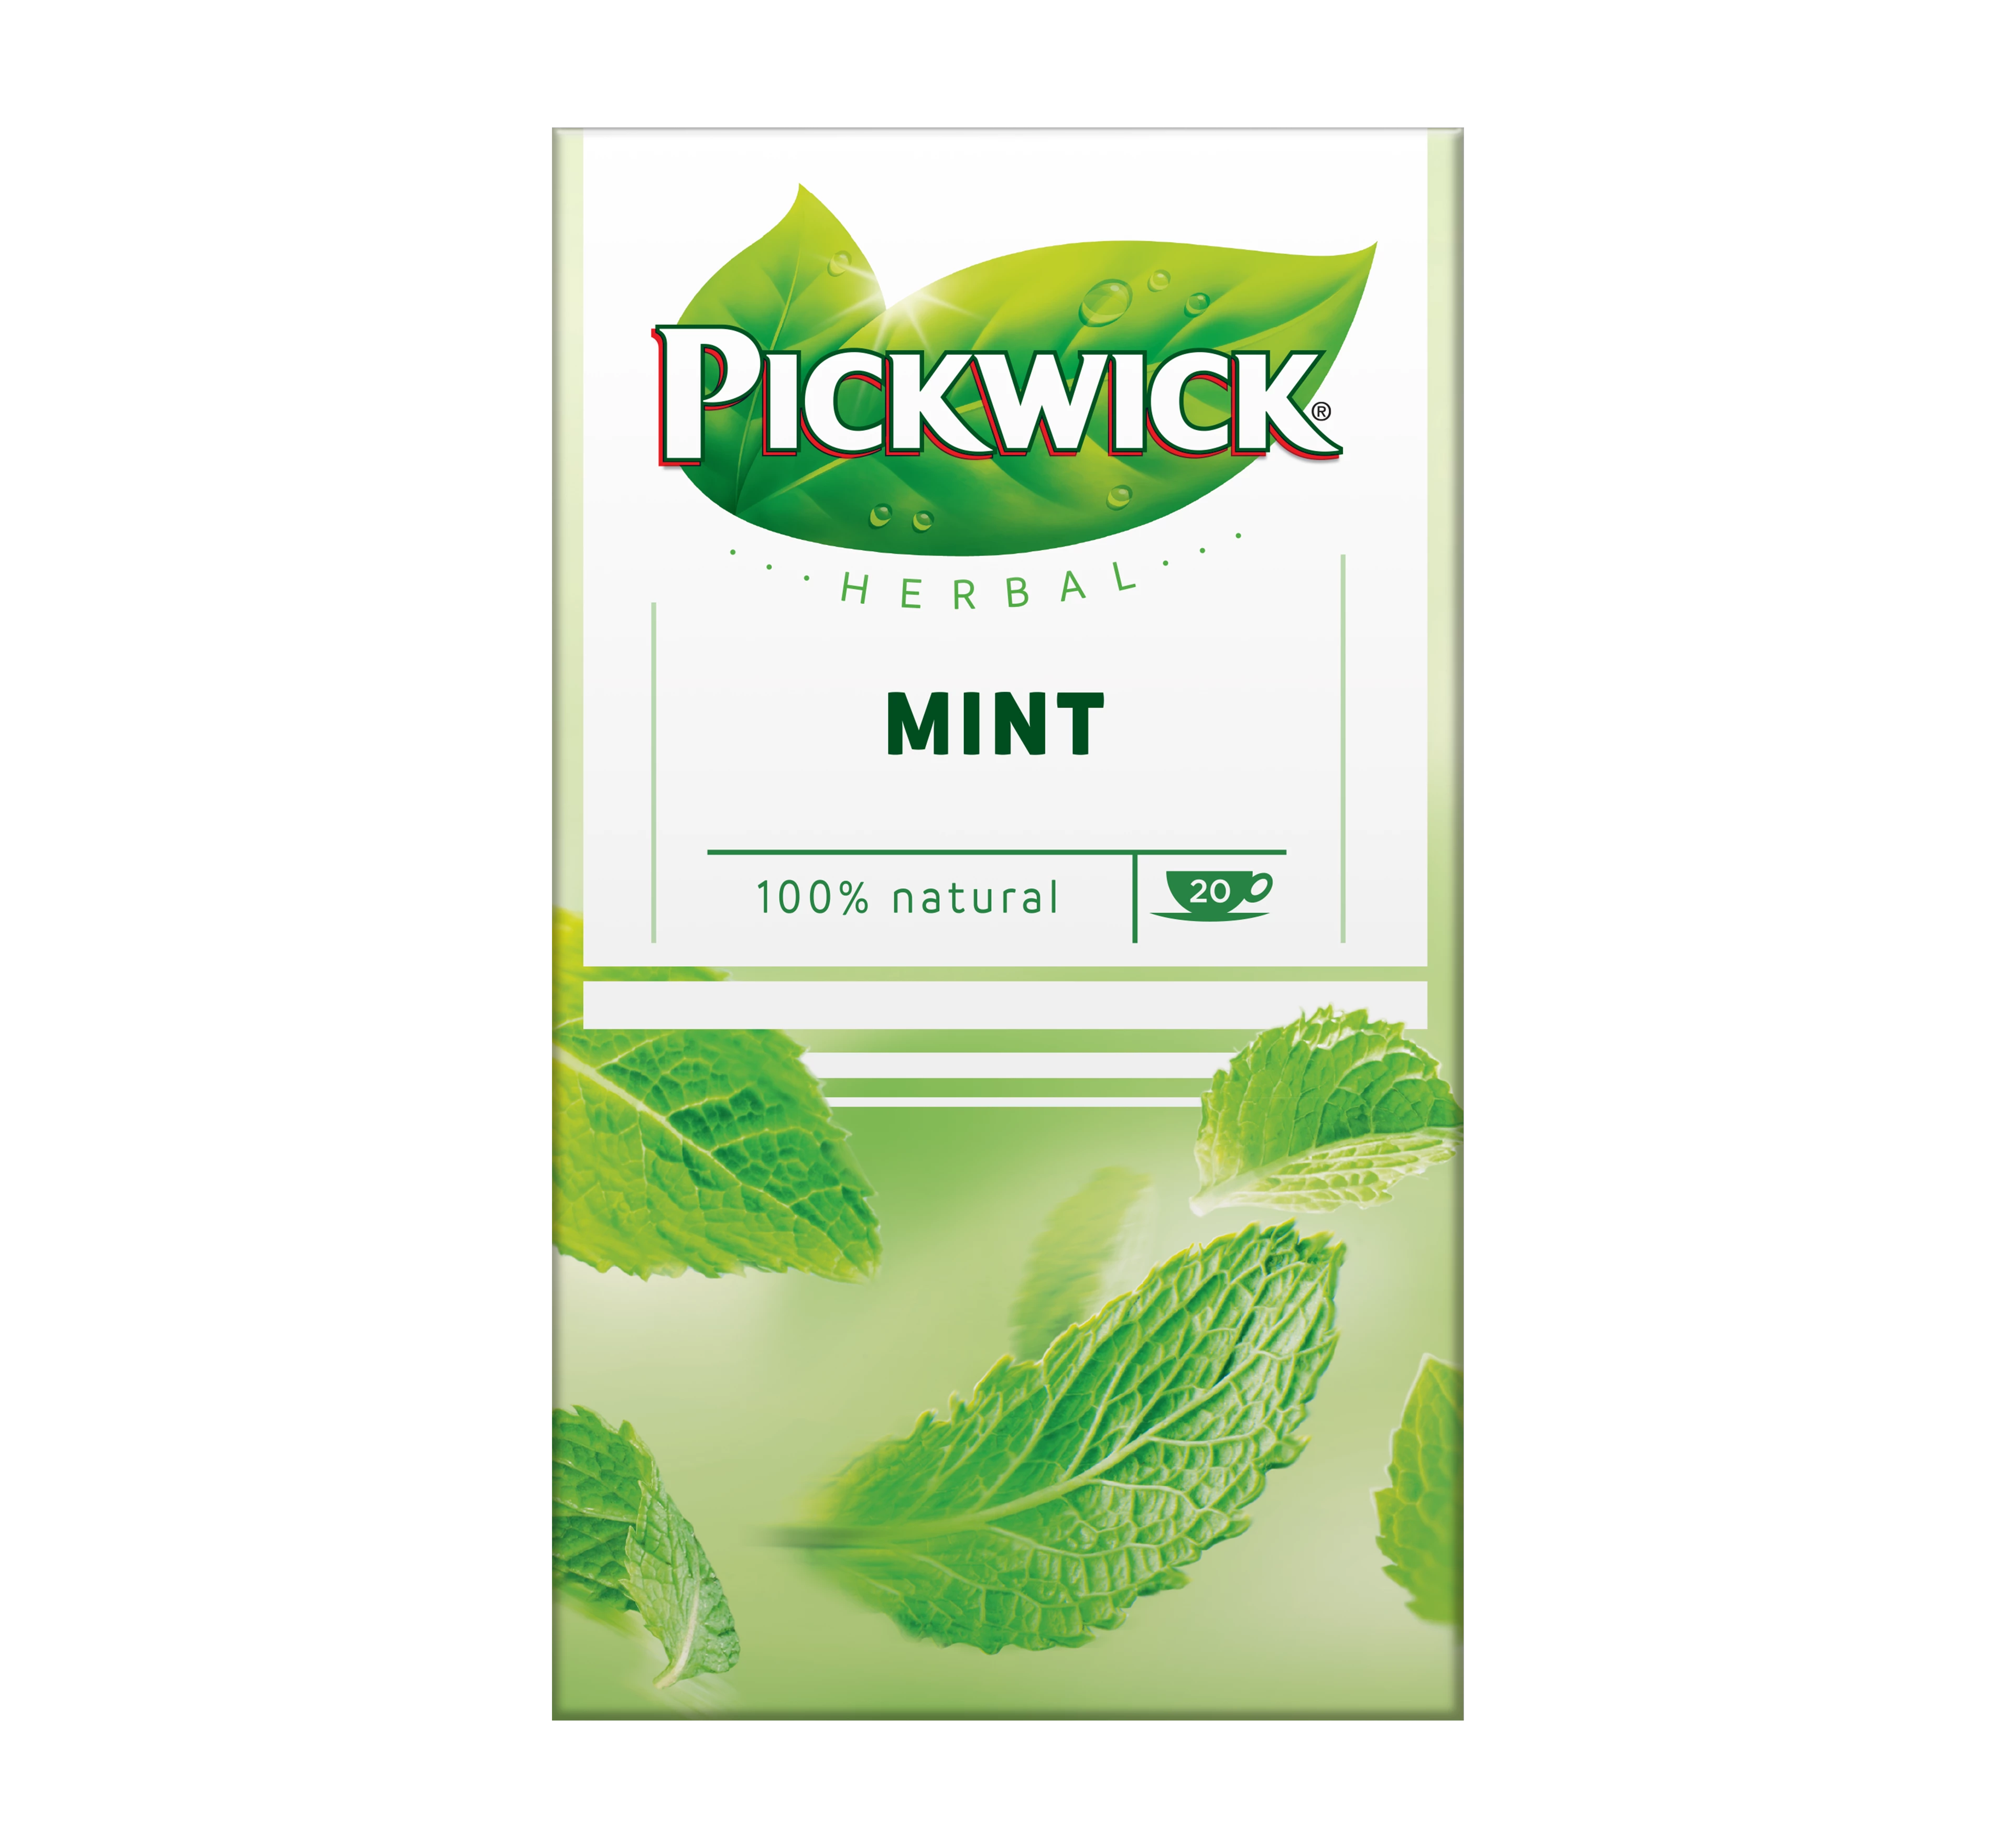 Pickwick munt packshot visual